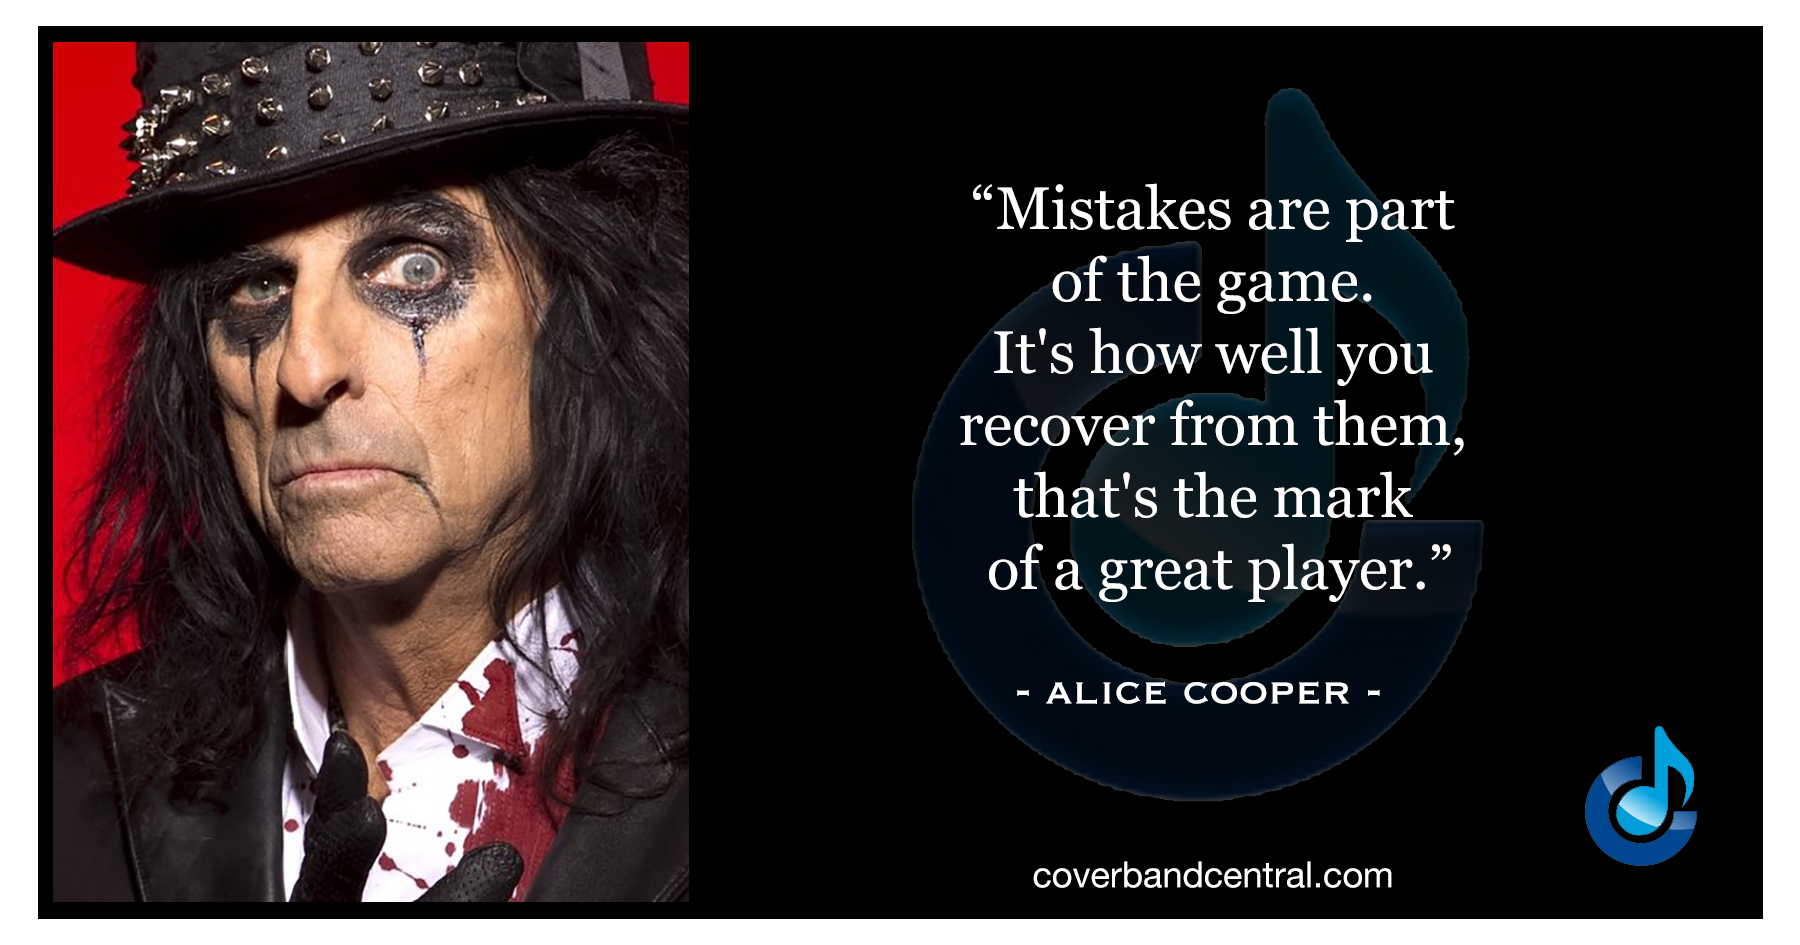 Alice Cooper quote